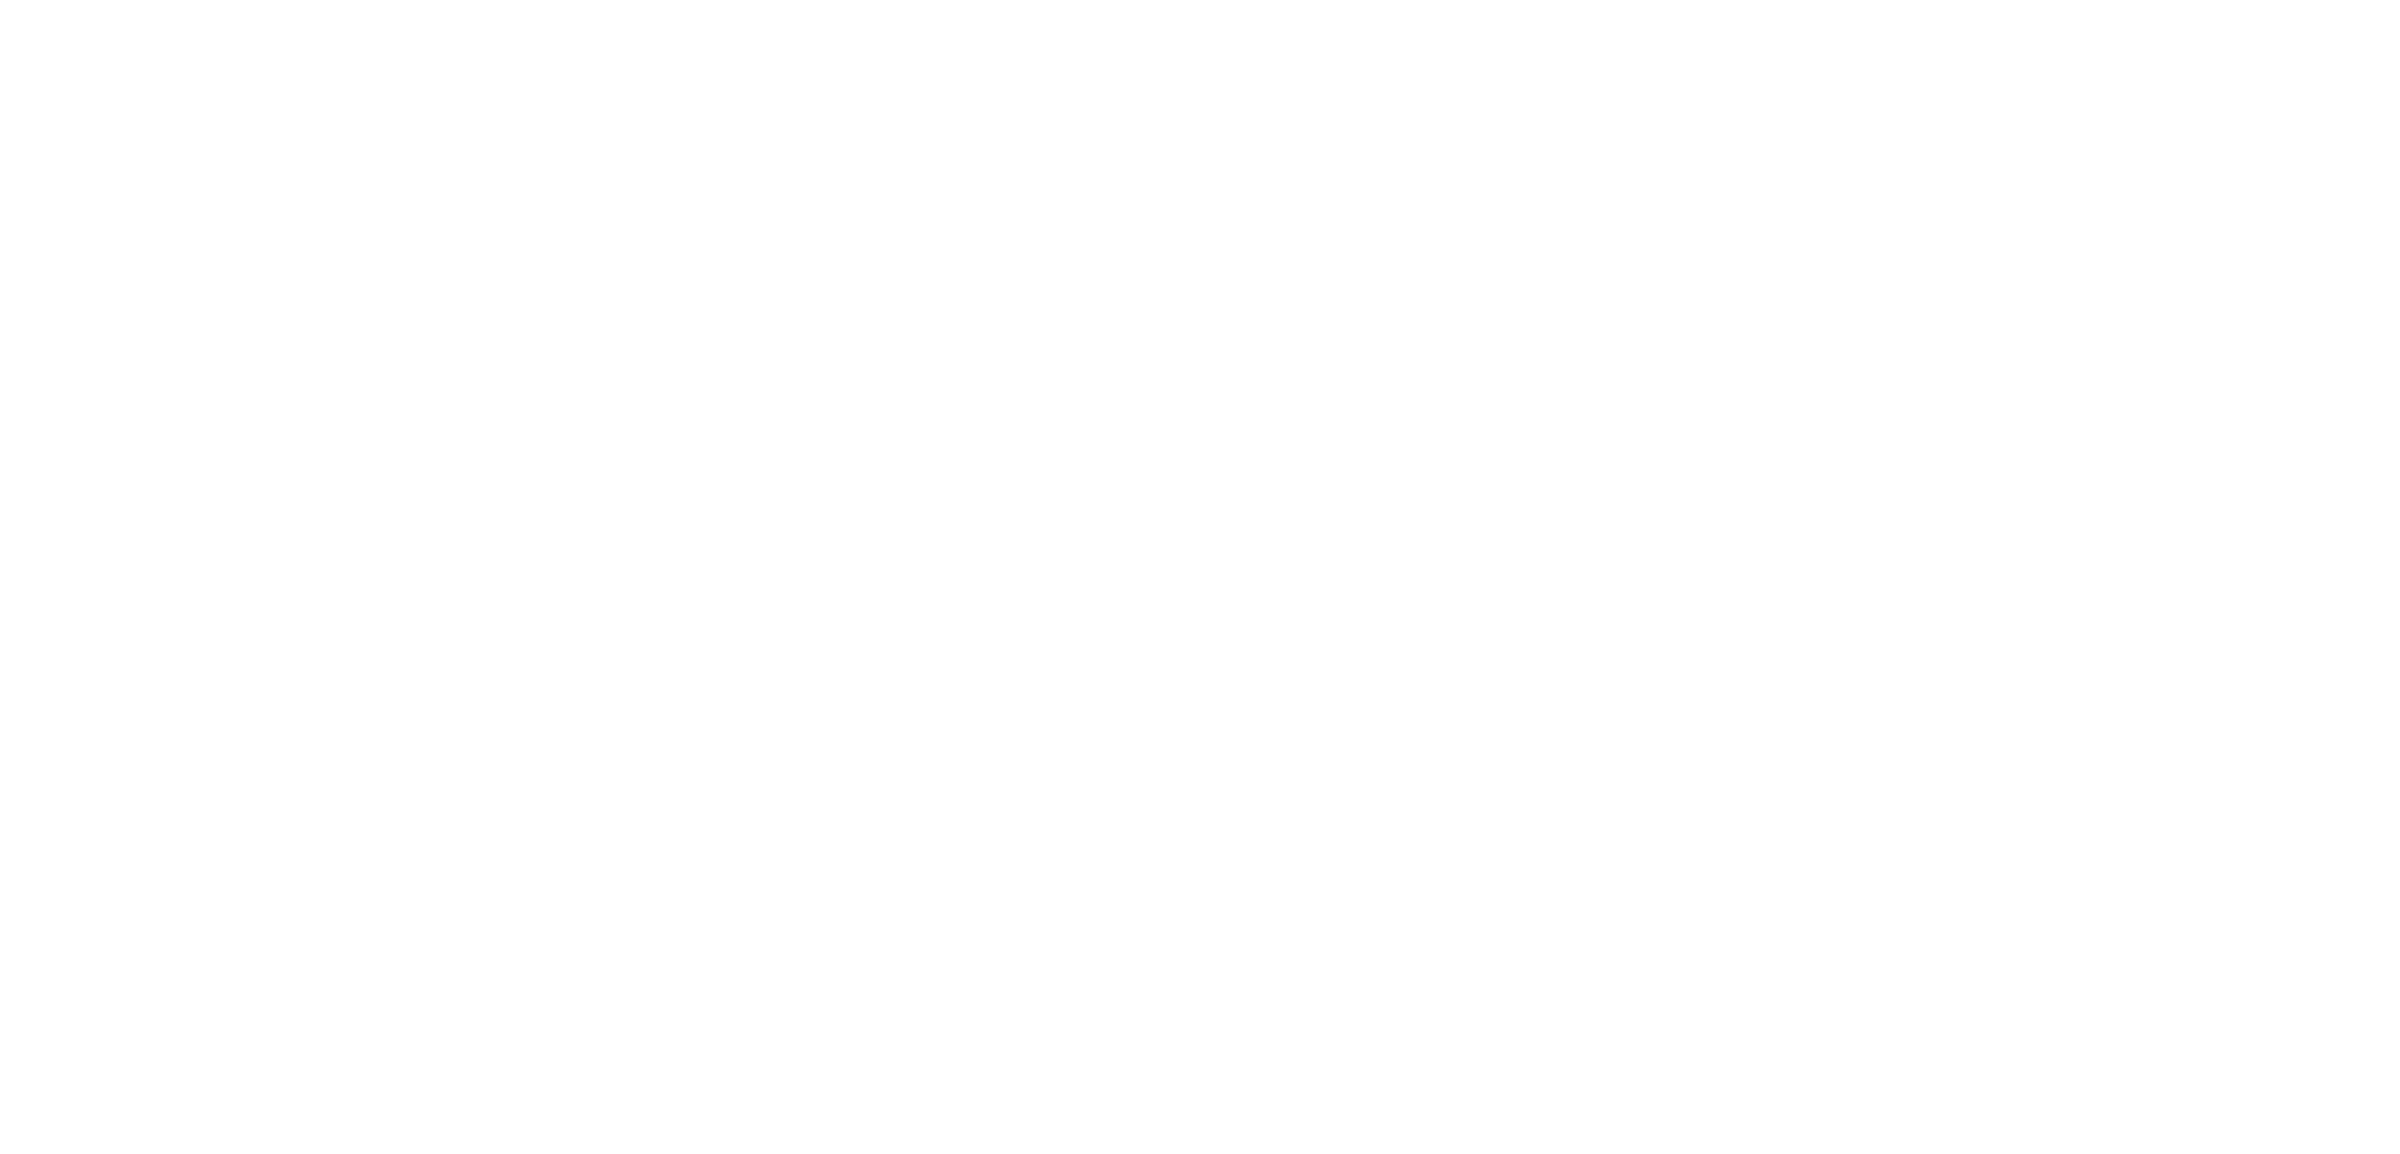 San Francisco International Hip Hop DanceFest